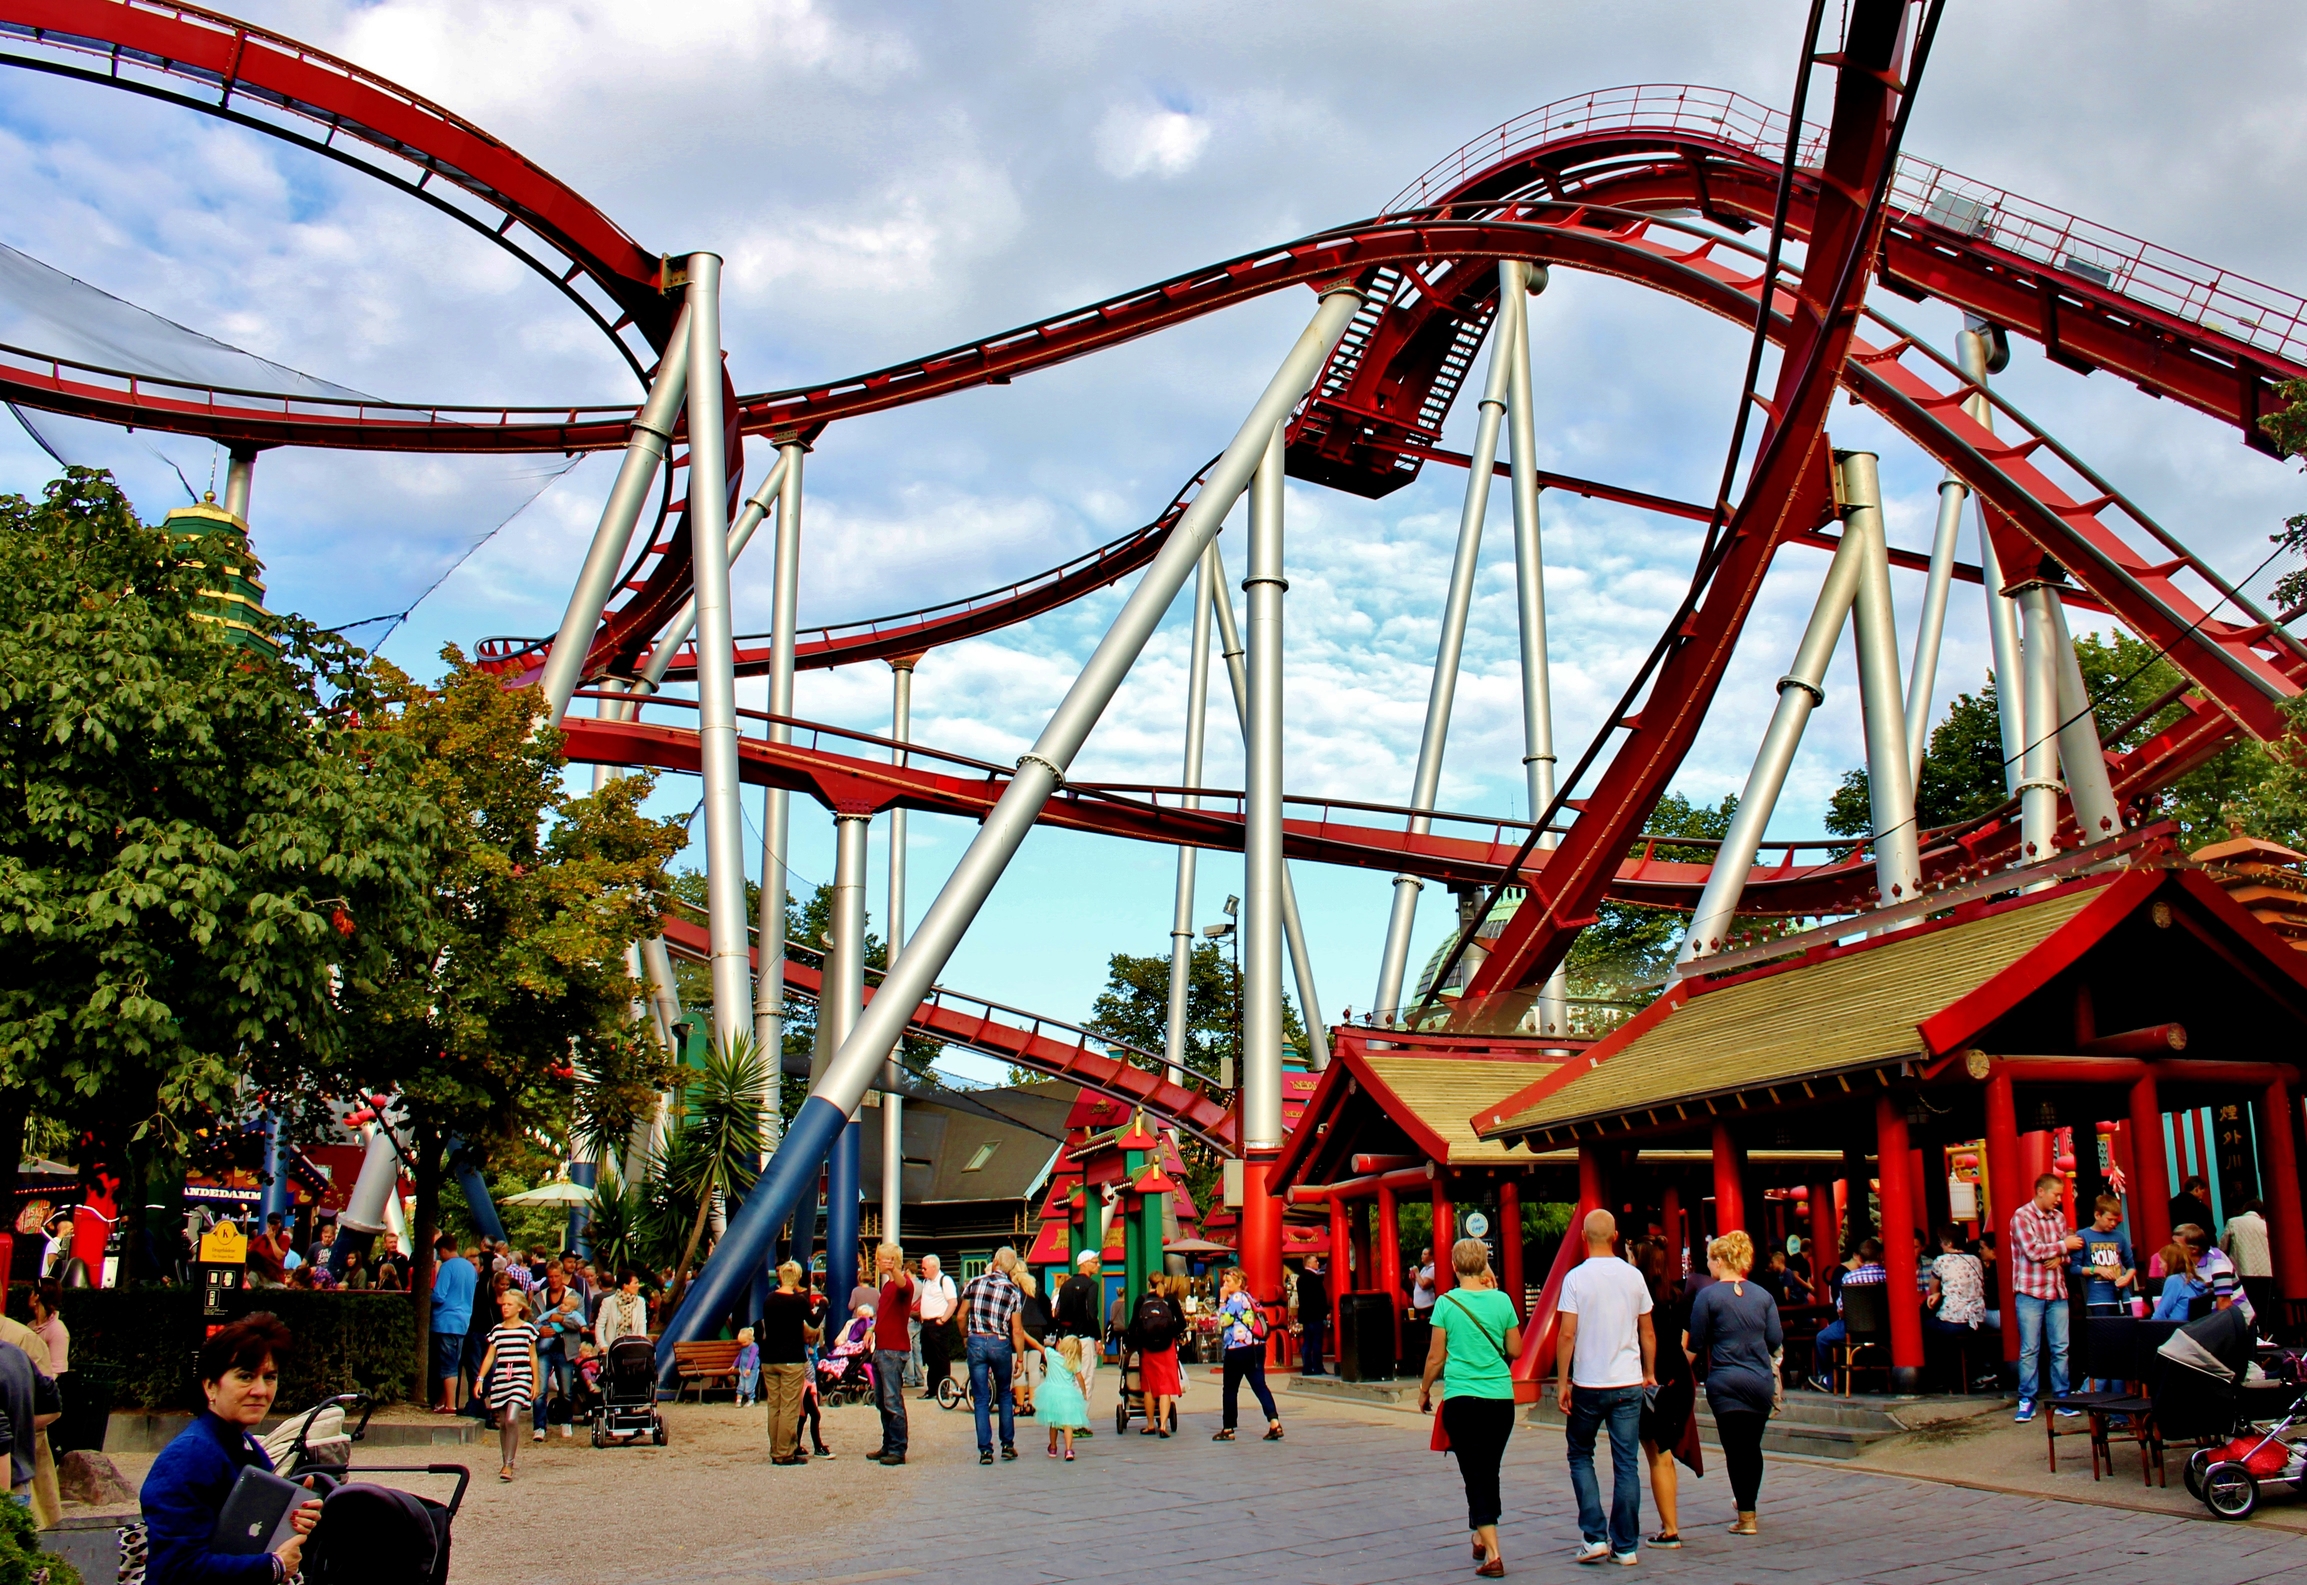 The Daemon roller coaster in Tivoli 